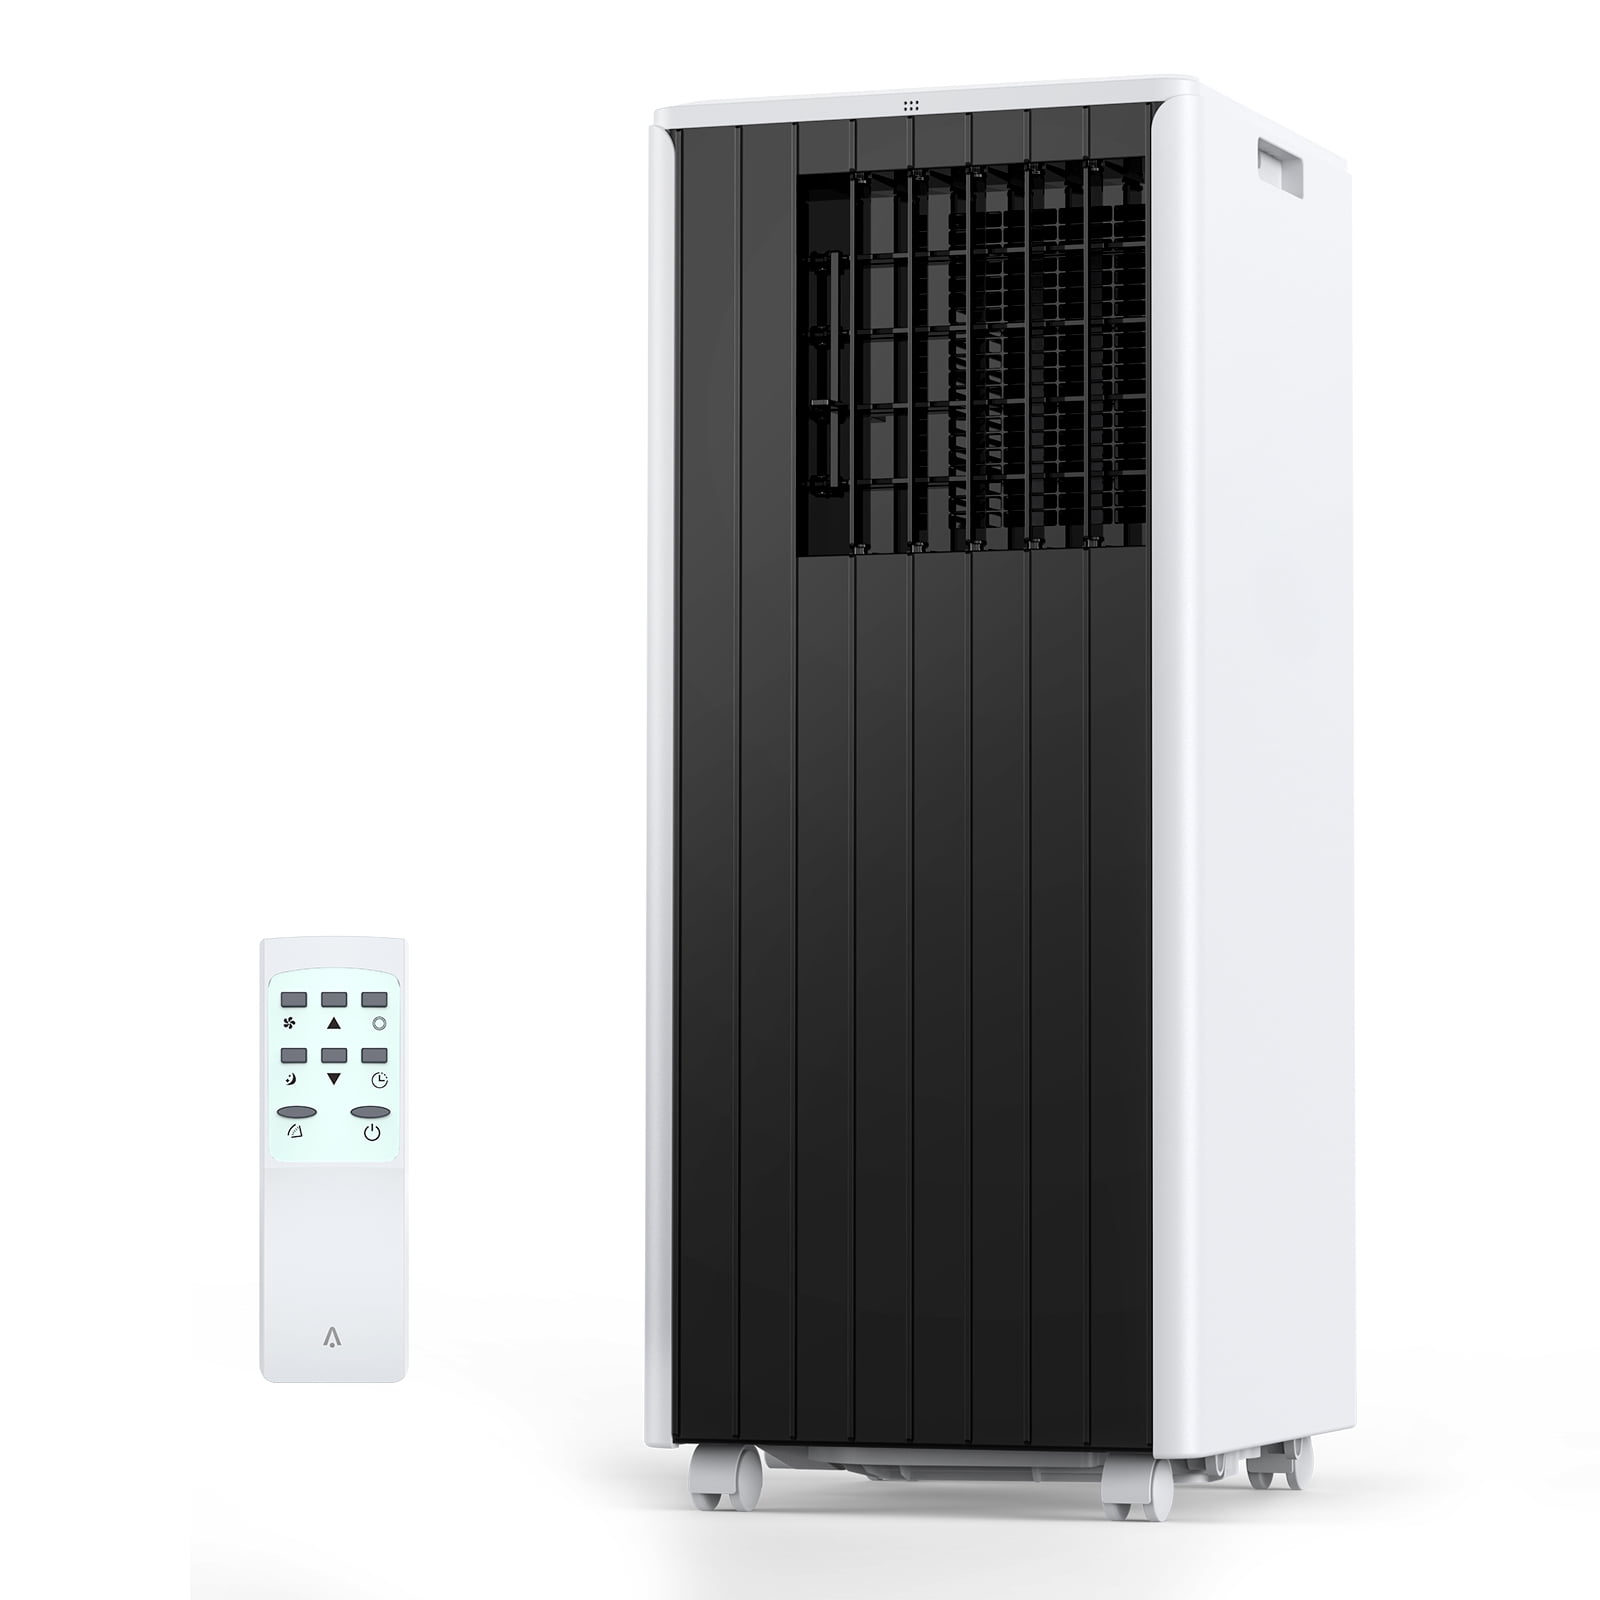 8000 BTU Portable Air Conditioner with Remote Control, 3 in 1 Air  Conditioner with Fan and Dry Function, Indoor AC Unit